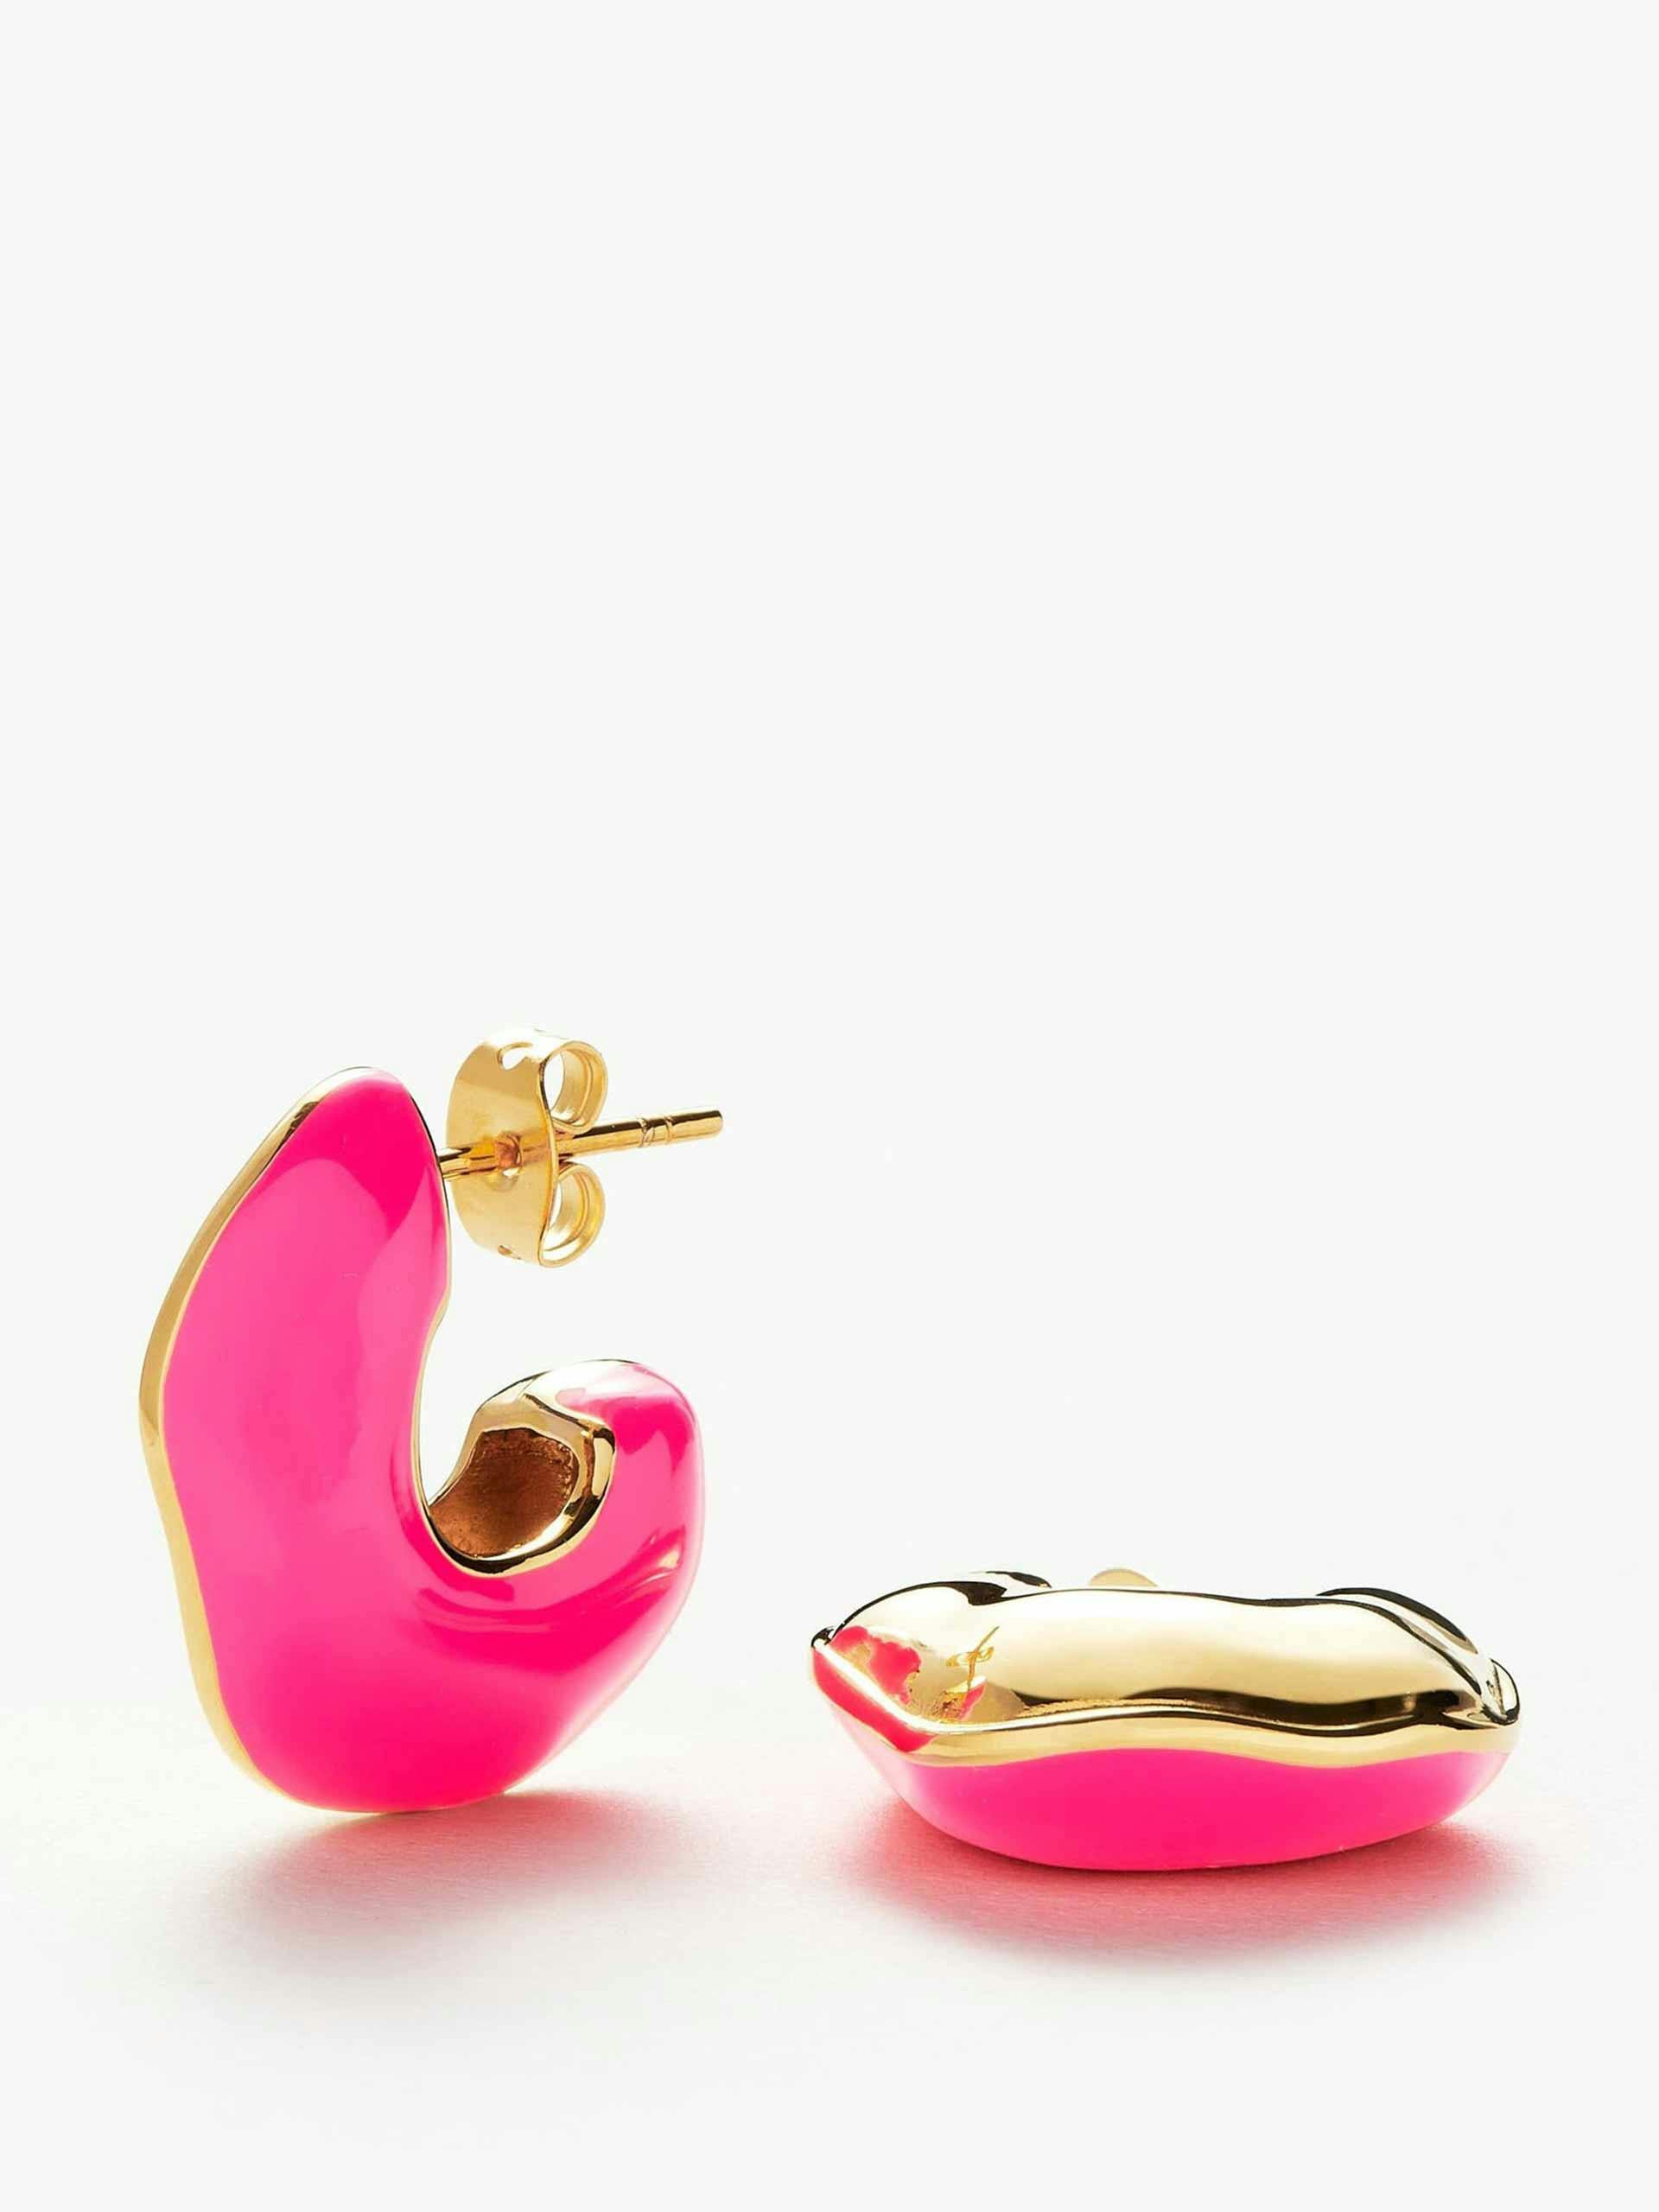 Hot pink and gold hoop earrings